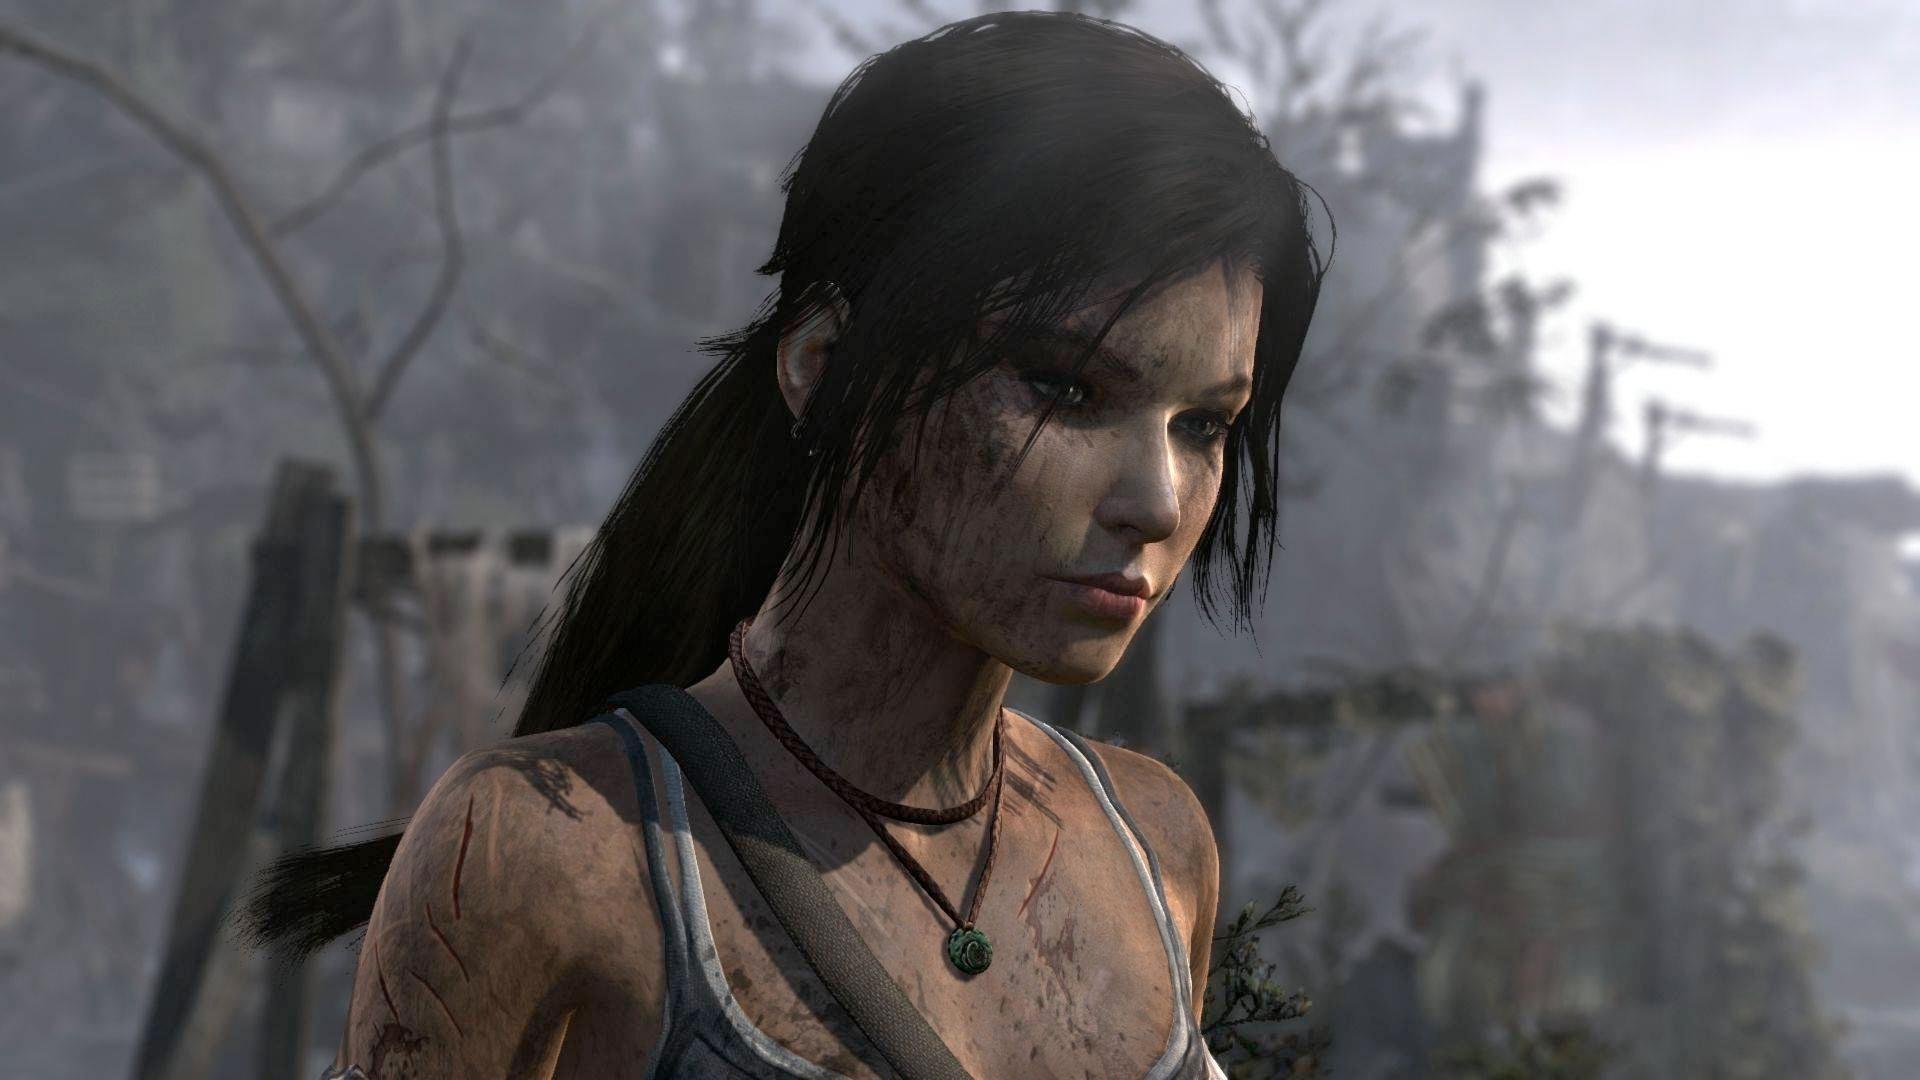 Tomb raider ps4 купить. Tomb Raider Definitive Edition ps4. Томб Райдер 2014 игра. Tomb Raider 2013 Definitive Edition.